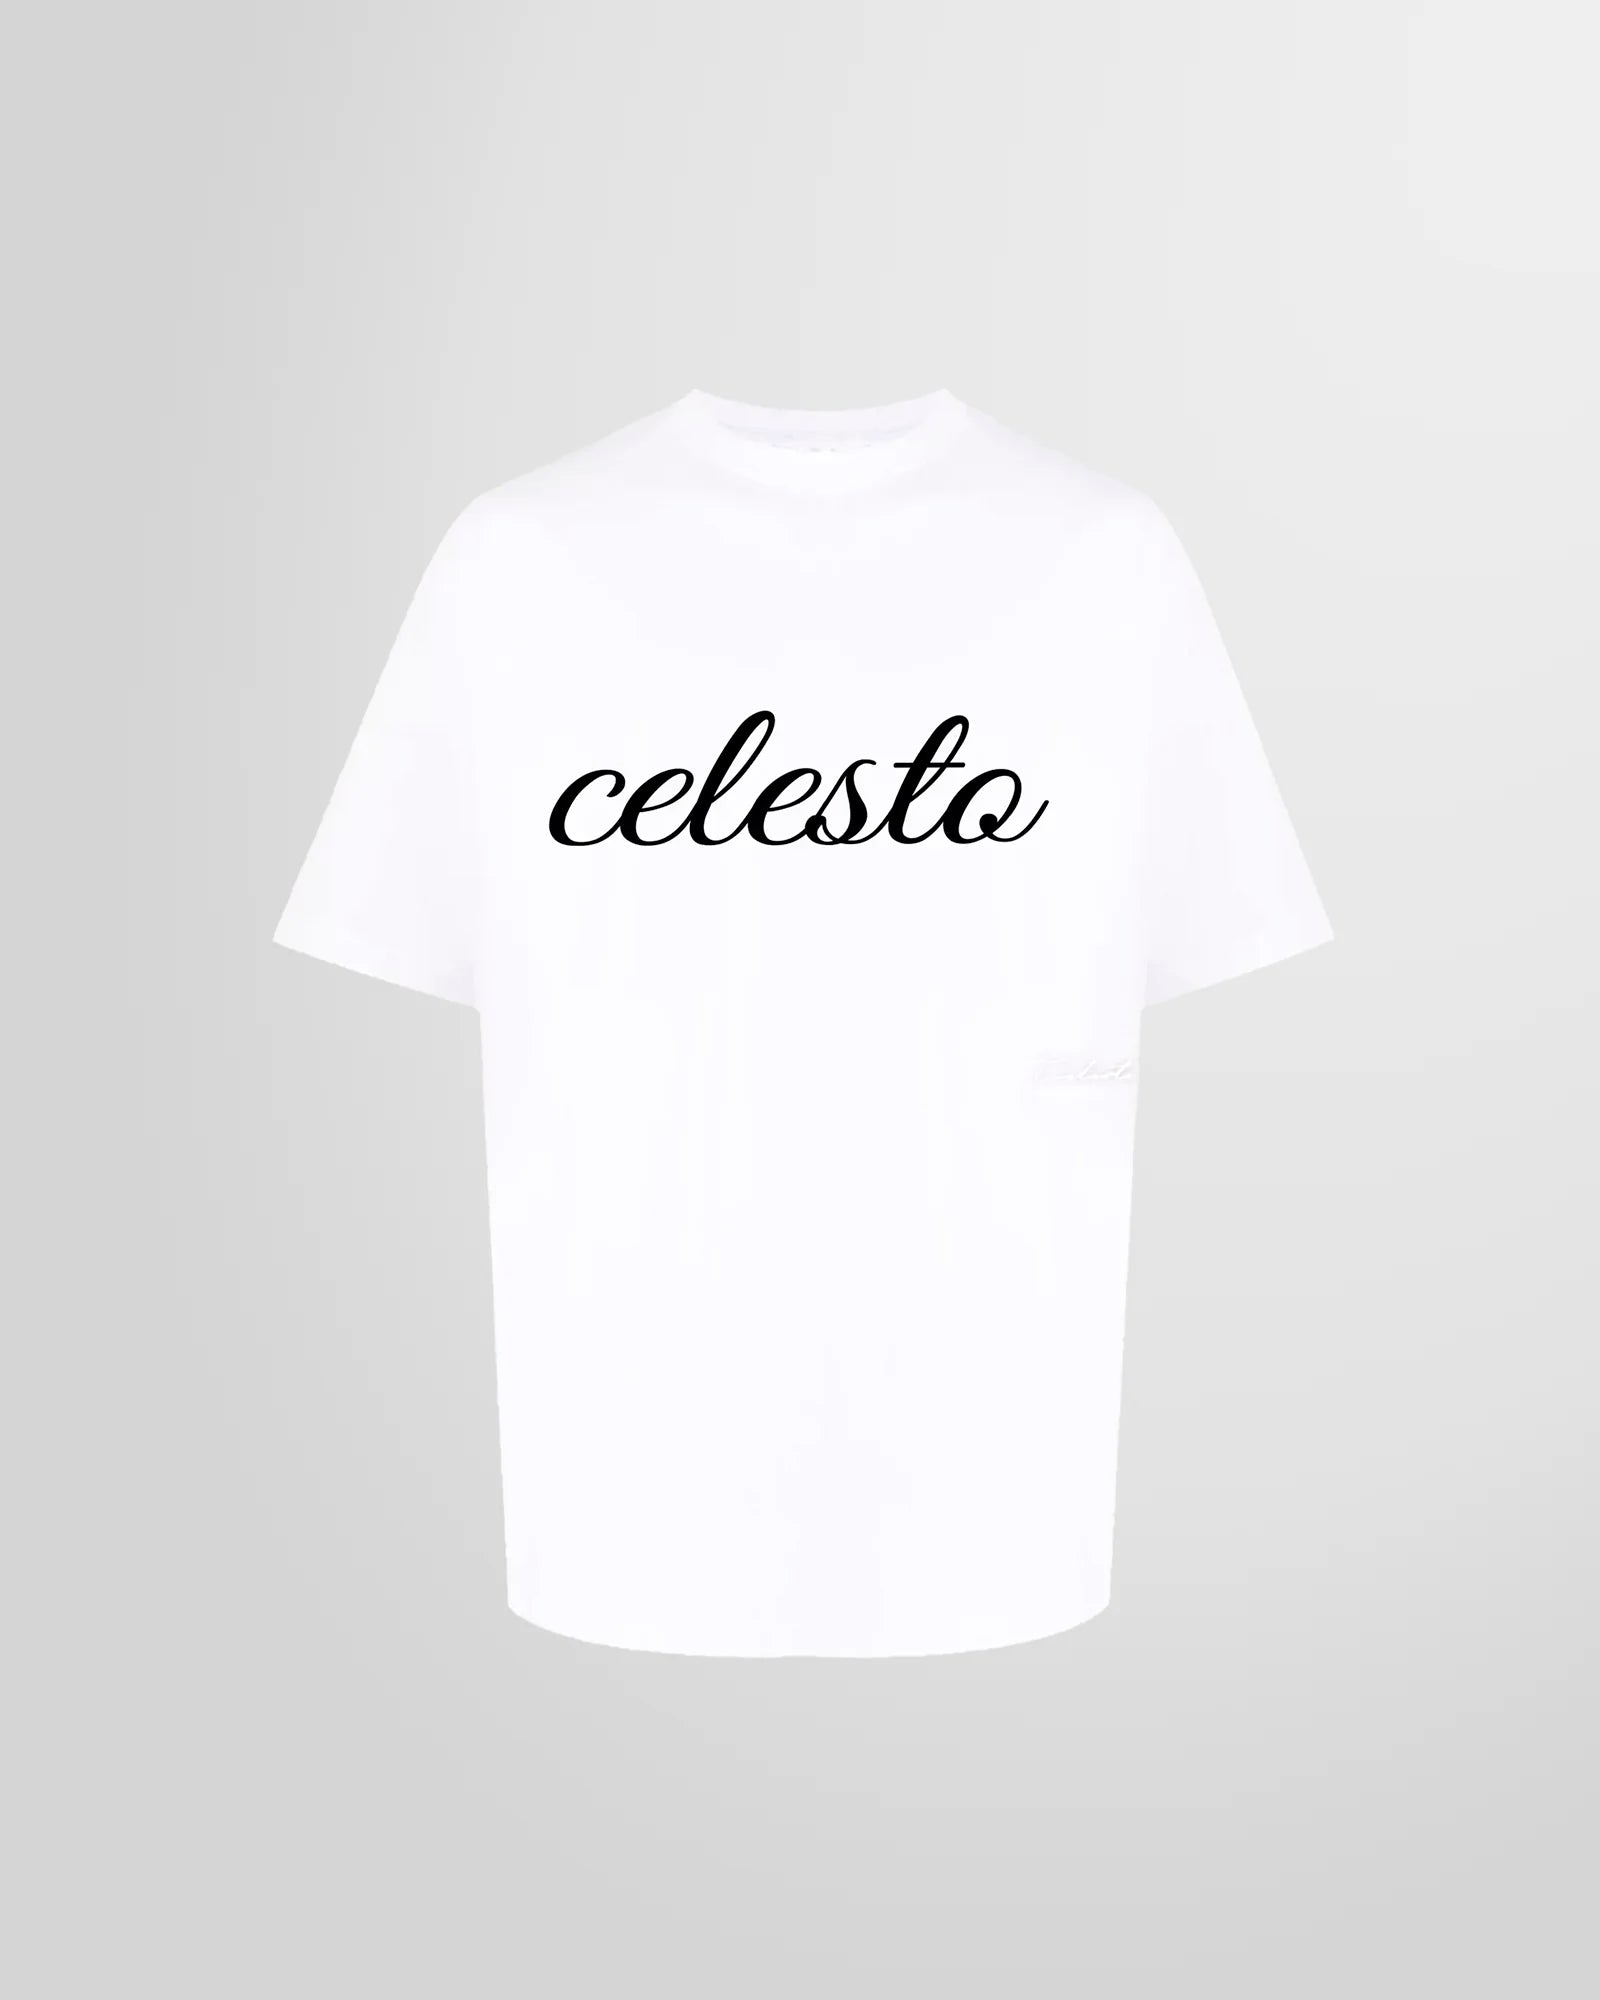 Celesto White P1 Pole Position T-Shirt